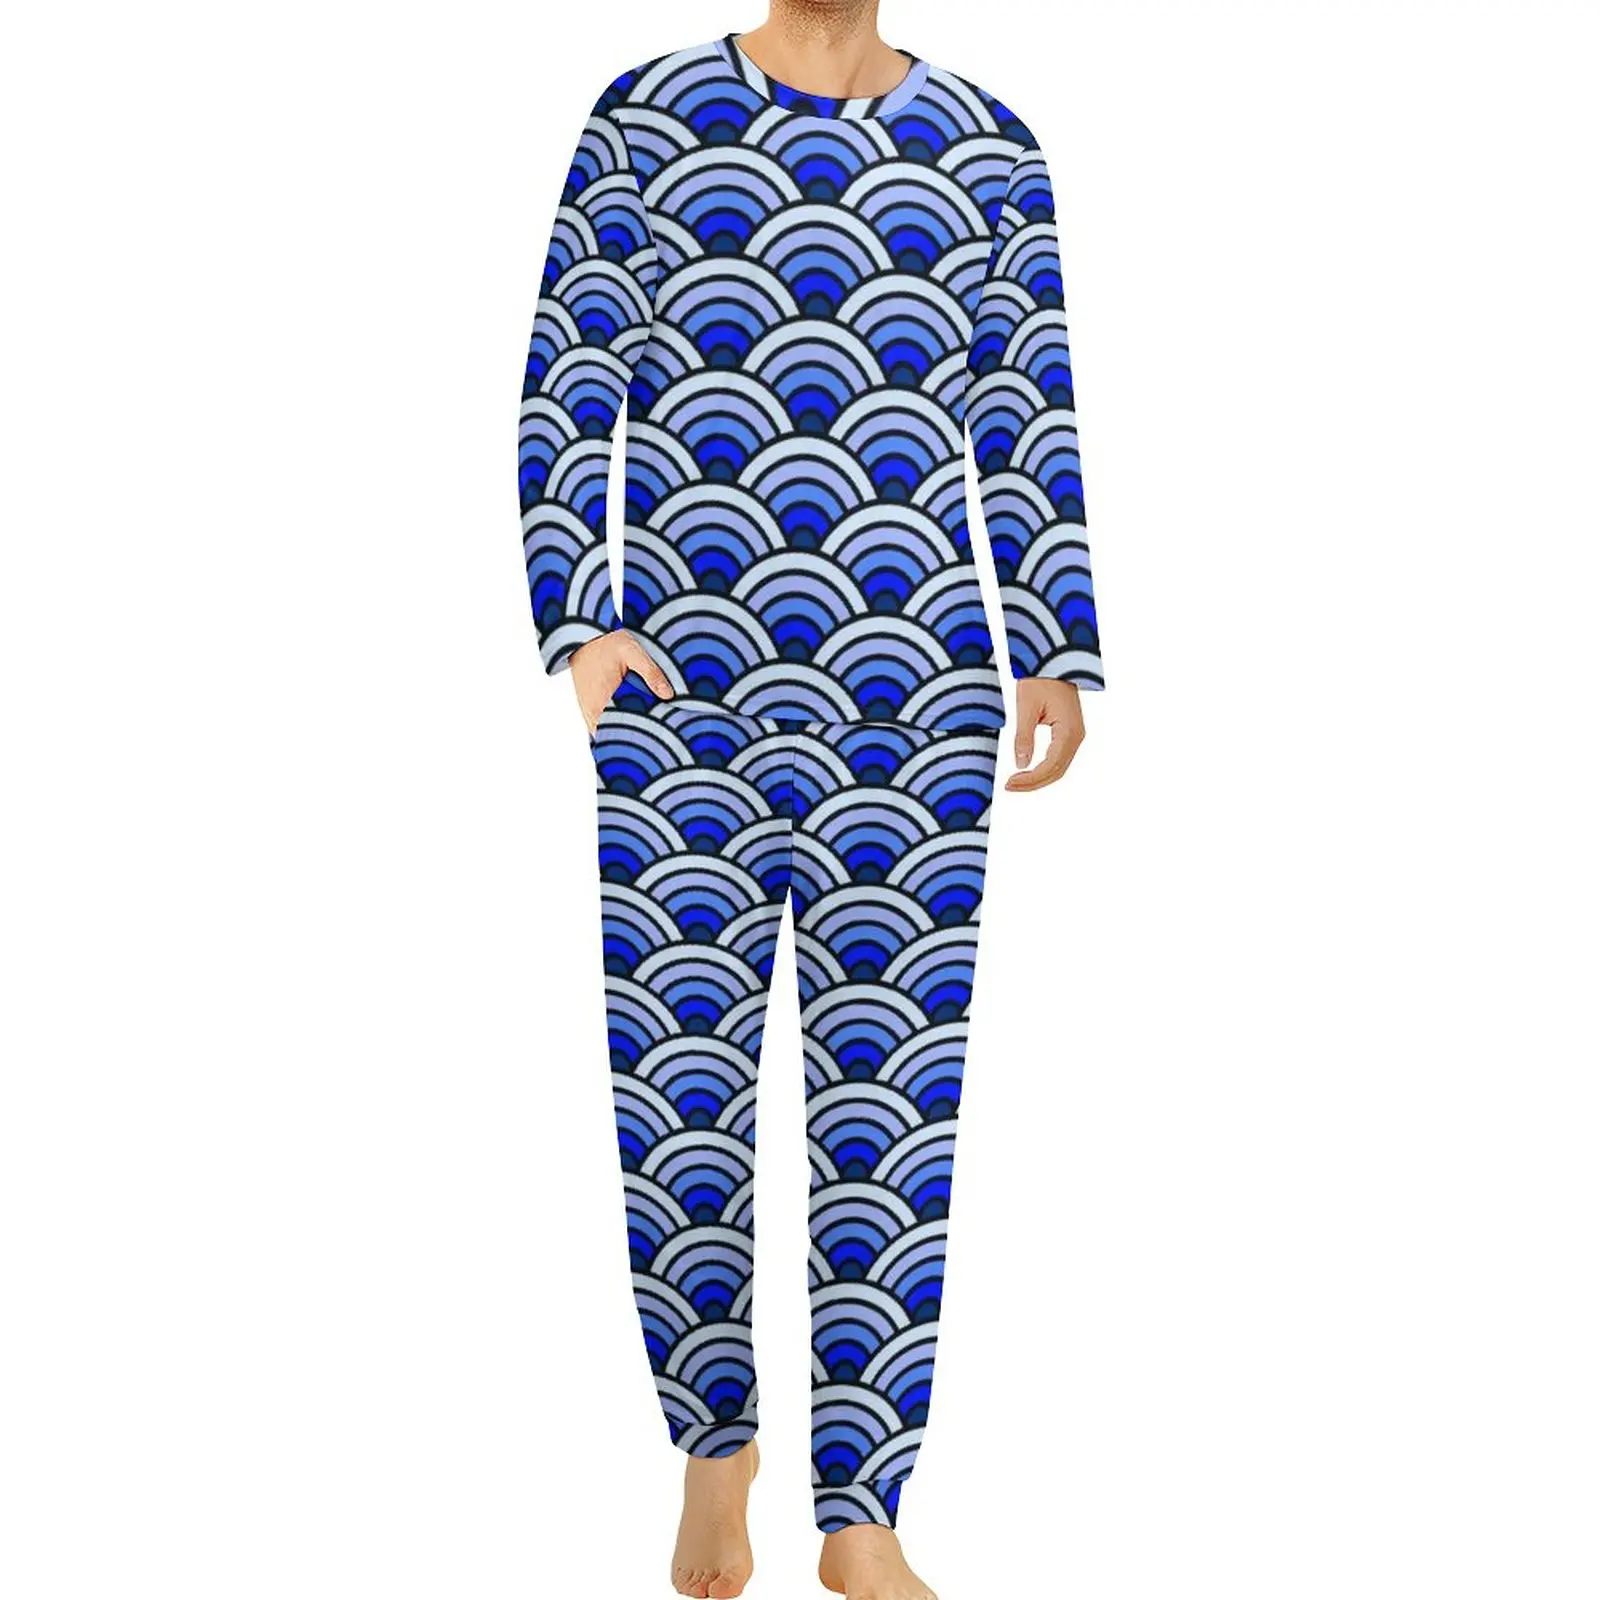 

Blue Waves Seigaiha Pajamas Traditional Japanese Men Long Sleeve Fashion Pajama Sets 2 Pieces Aesthetic Spring Design Nightwear